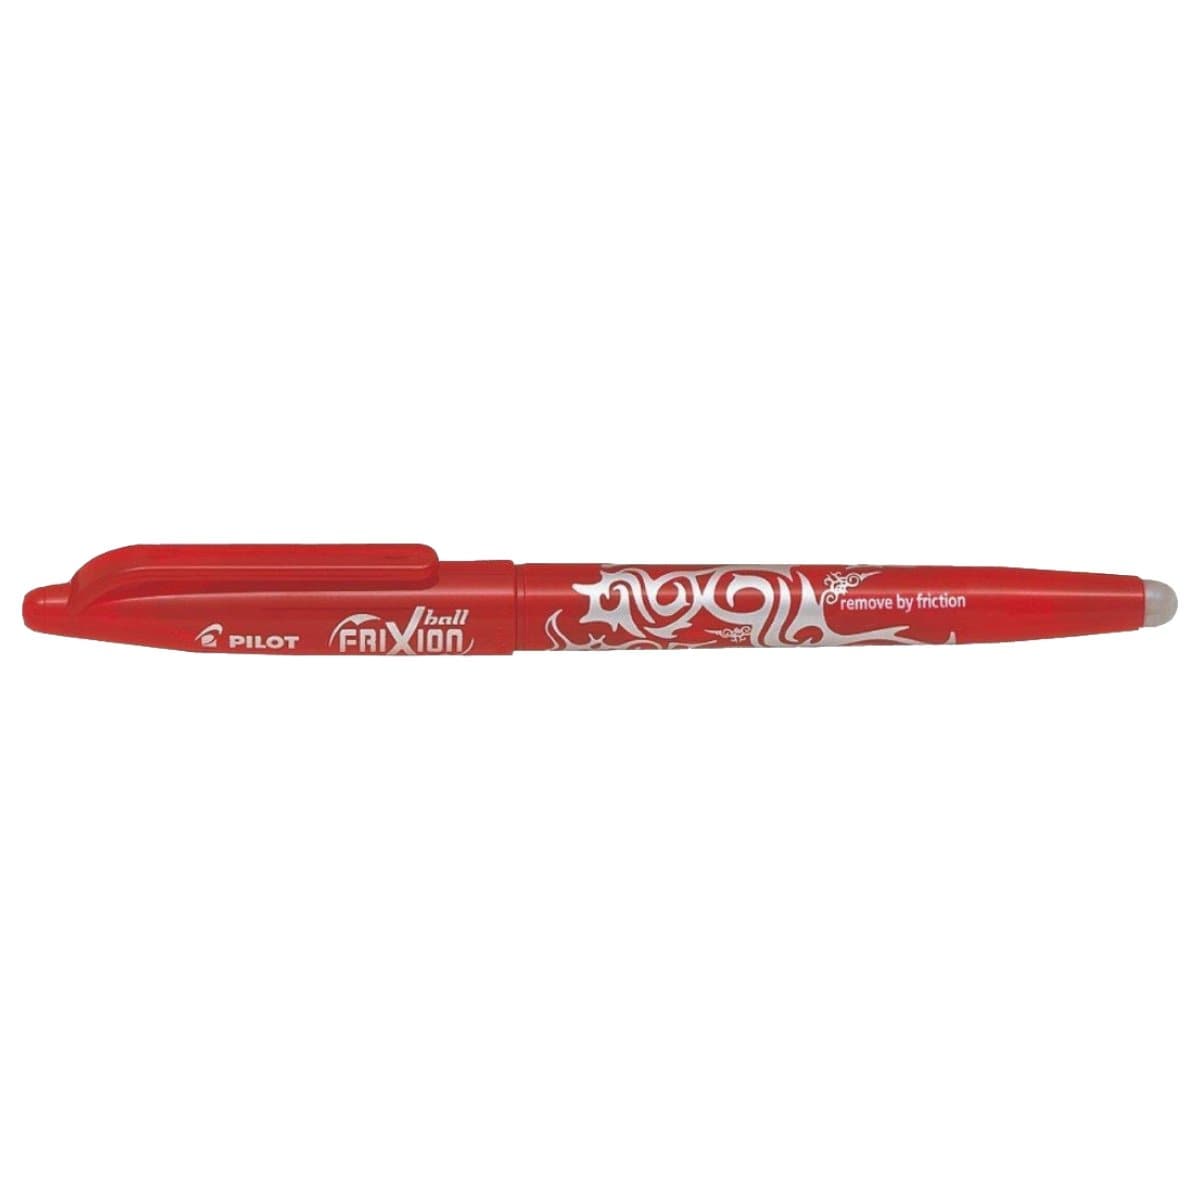 Pilot FriXion ball, Erasable Gel Ink Roller, 0.7mm, Red